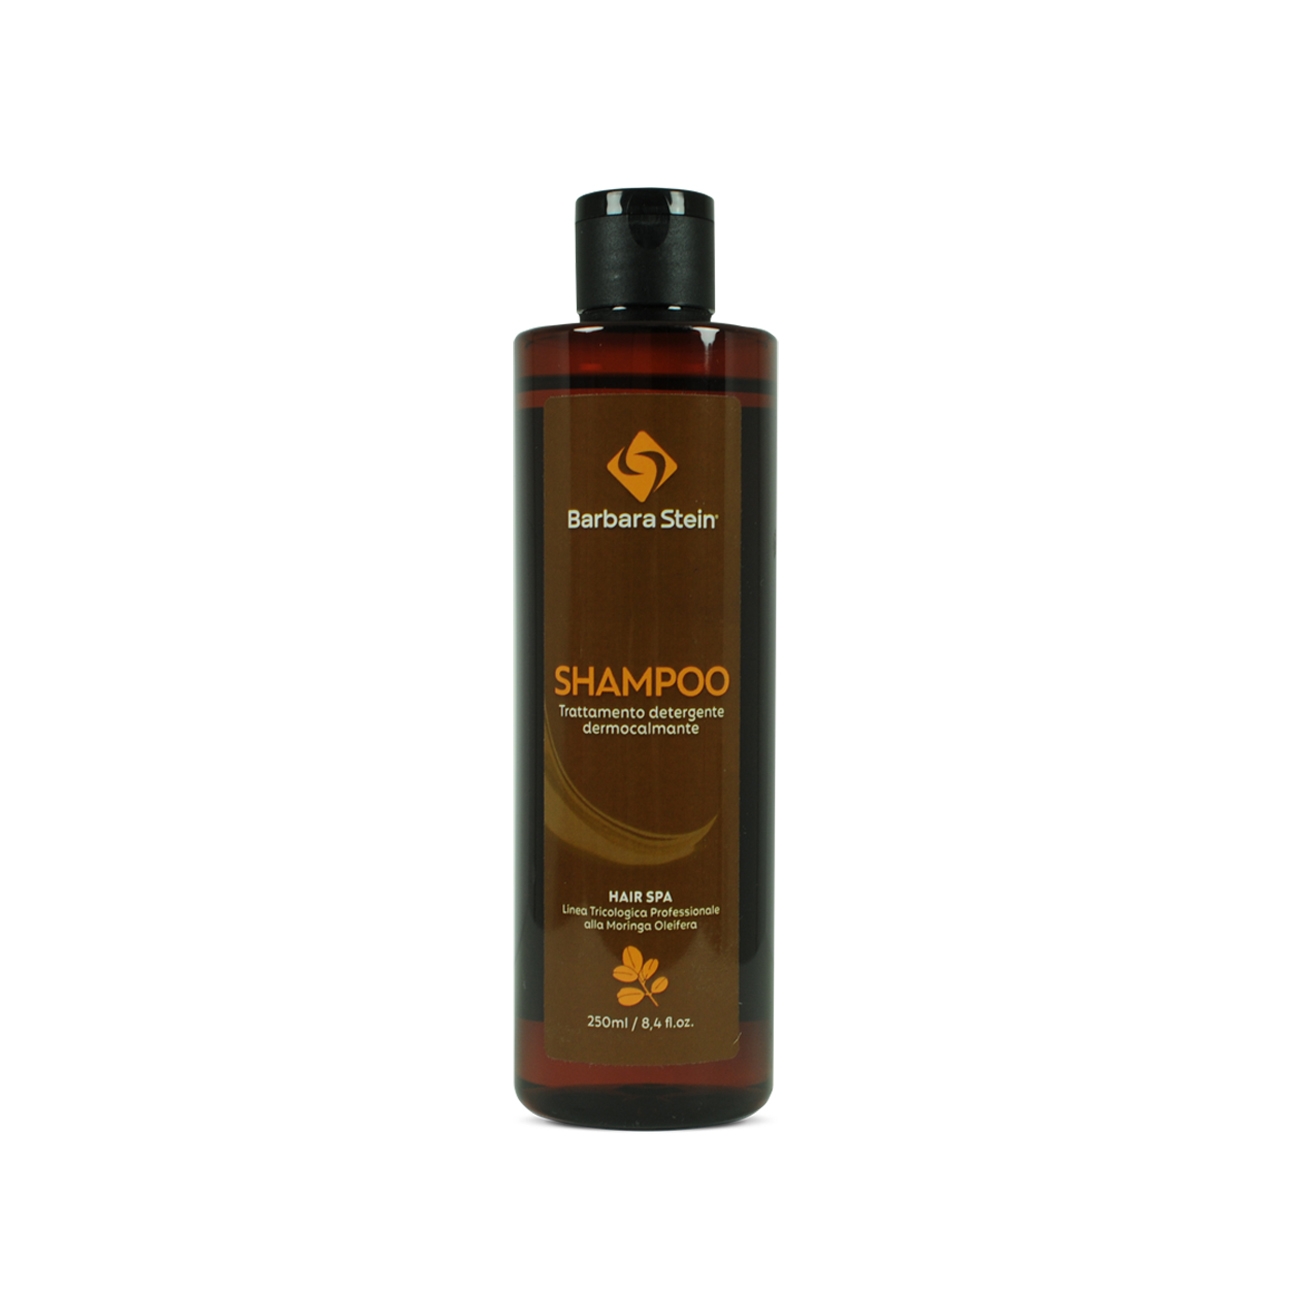 SHAMPOO dermocalmante (250 ml)